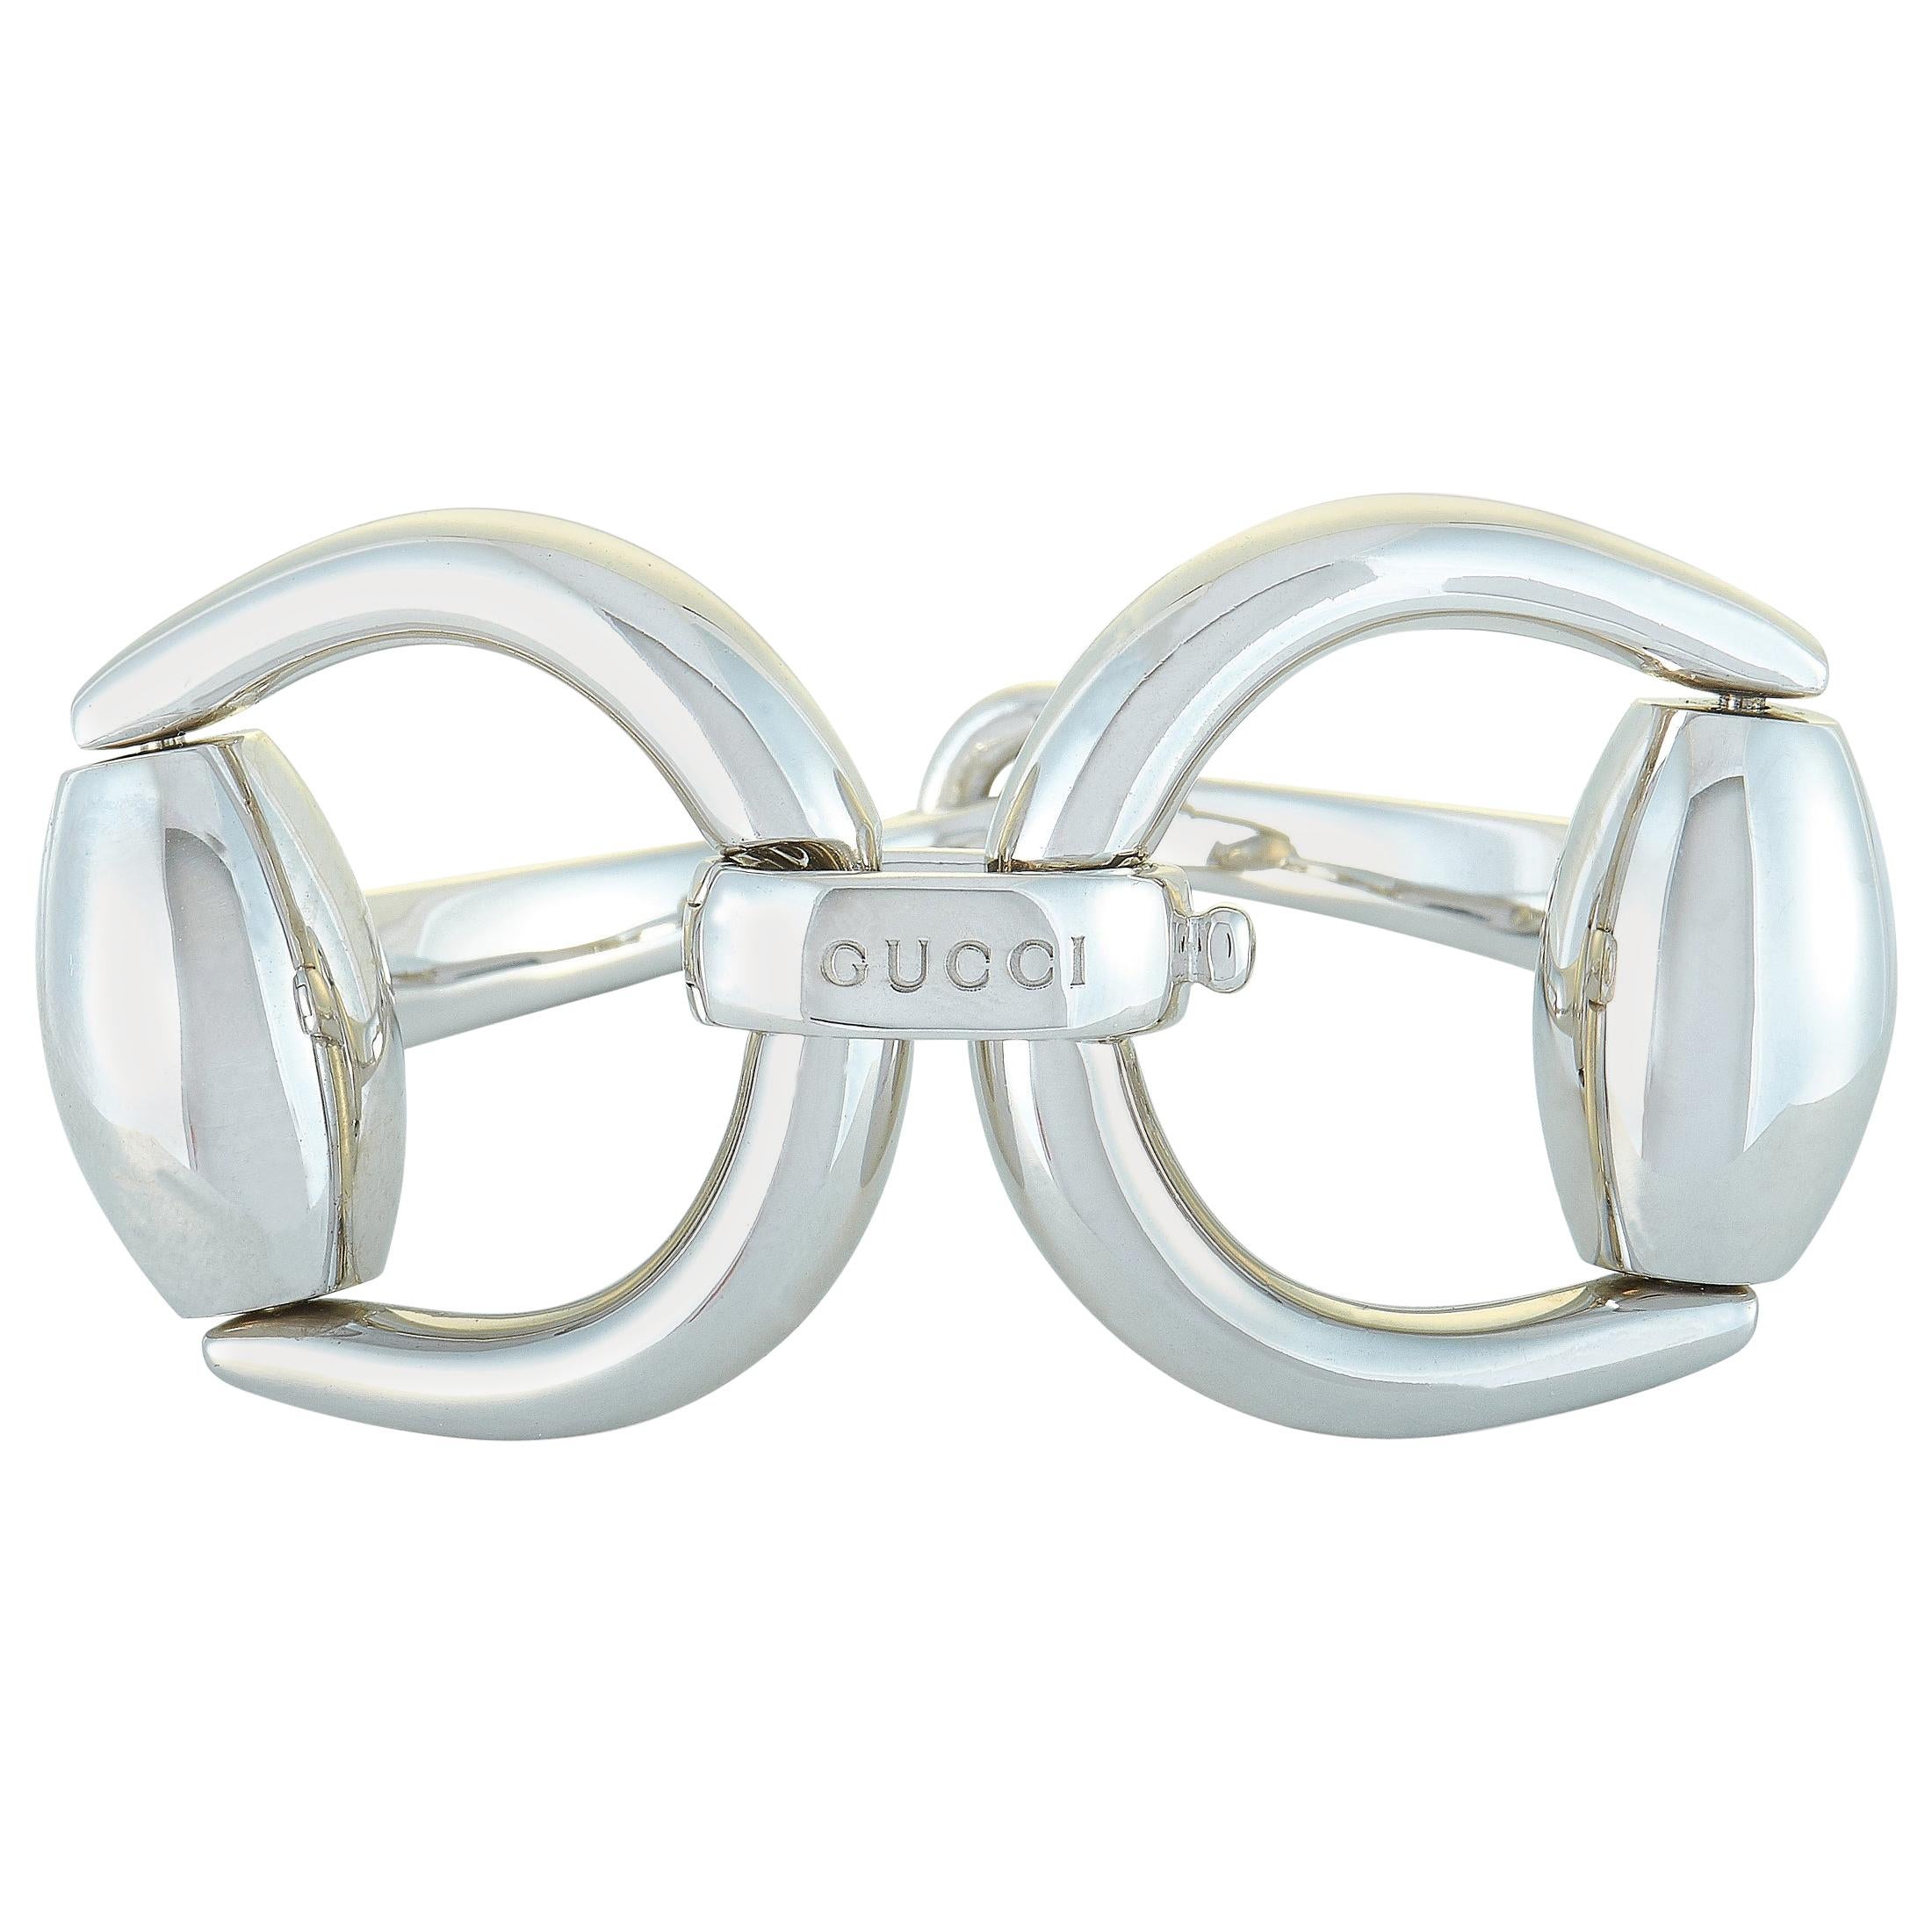 Gucci Horsebit Rhodium-Plated Sterling Silver Bracelet